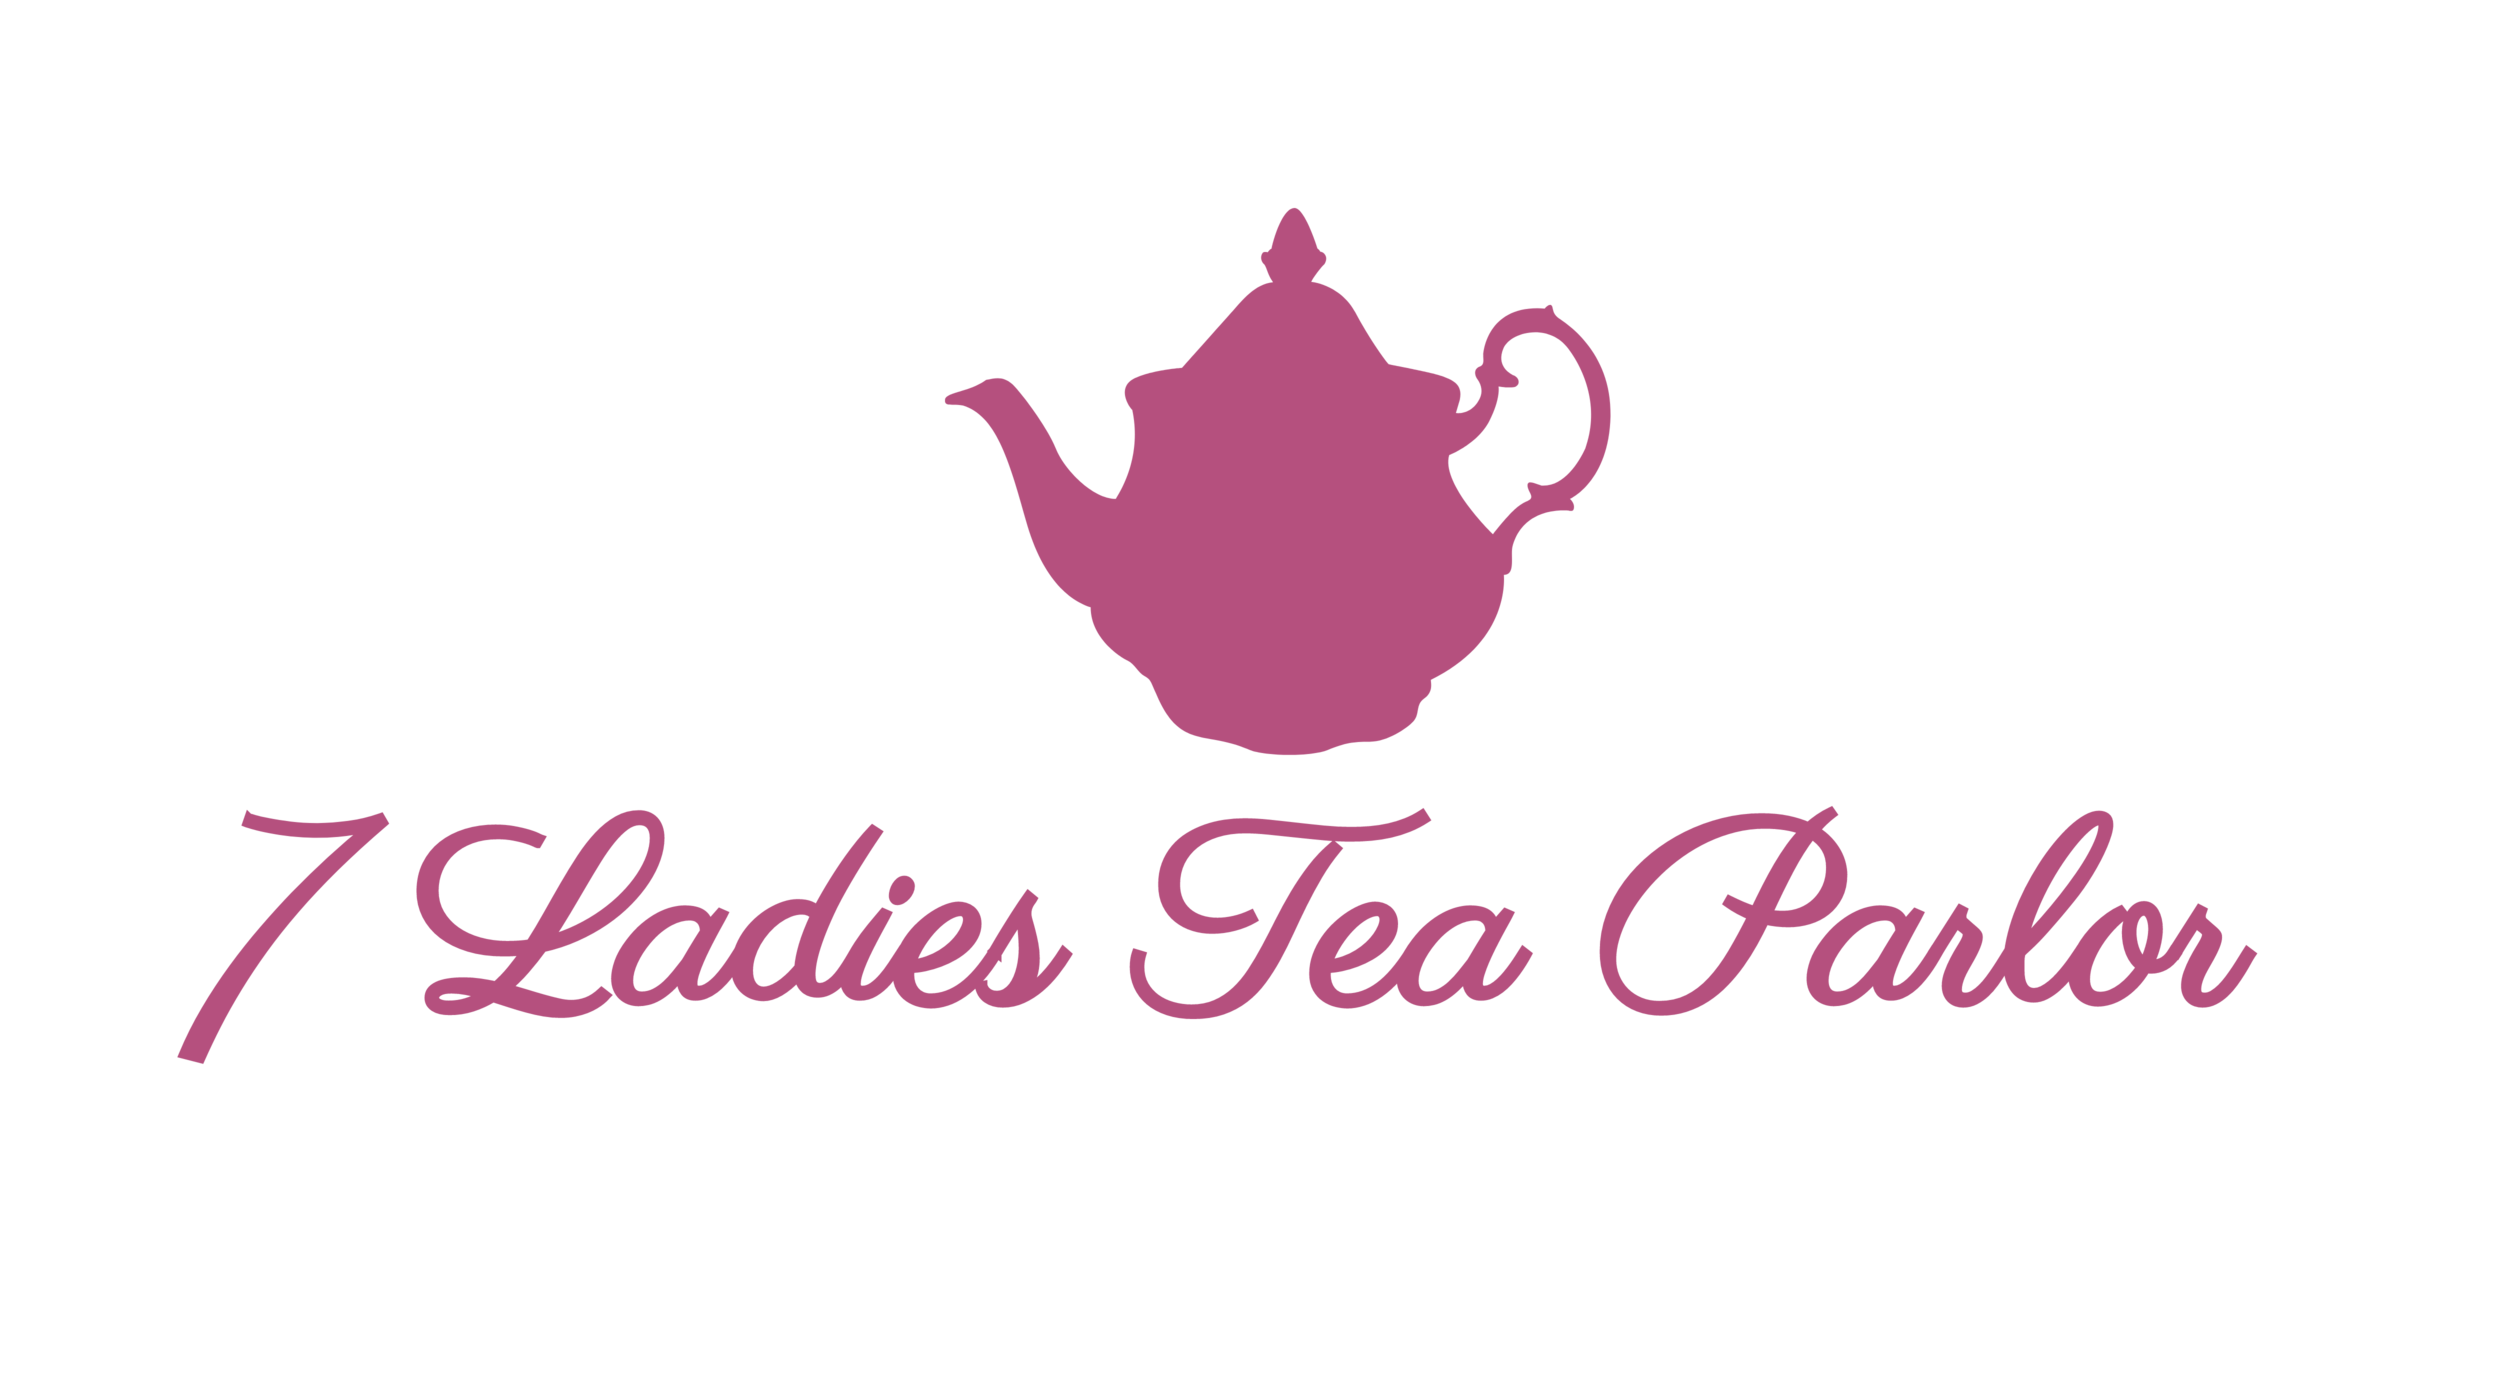 7 Ladies Tea Parlor